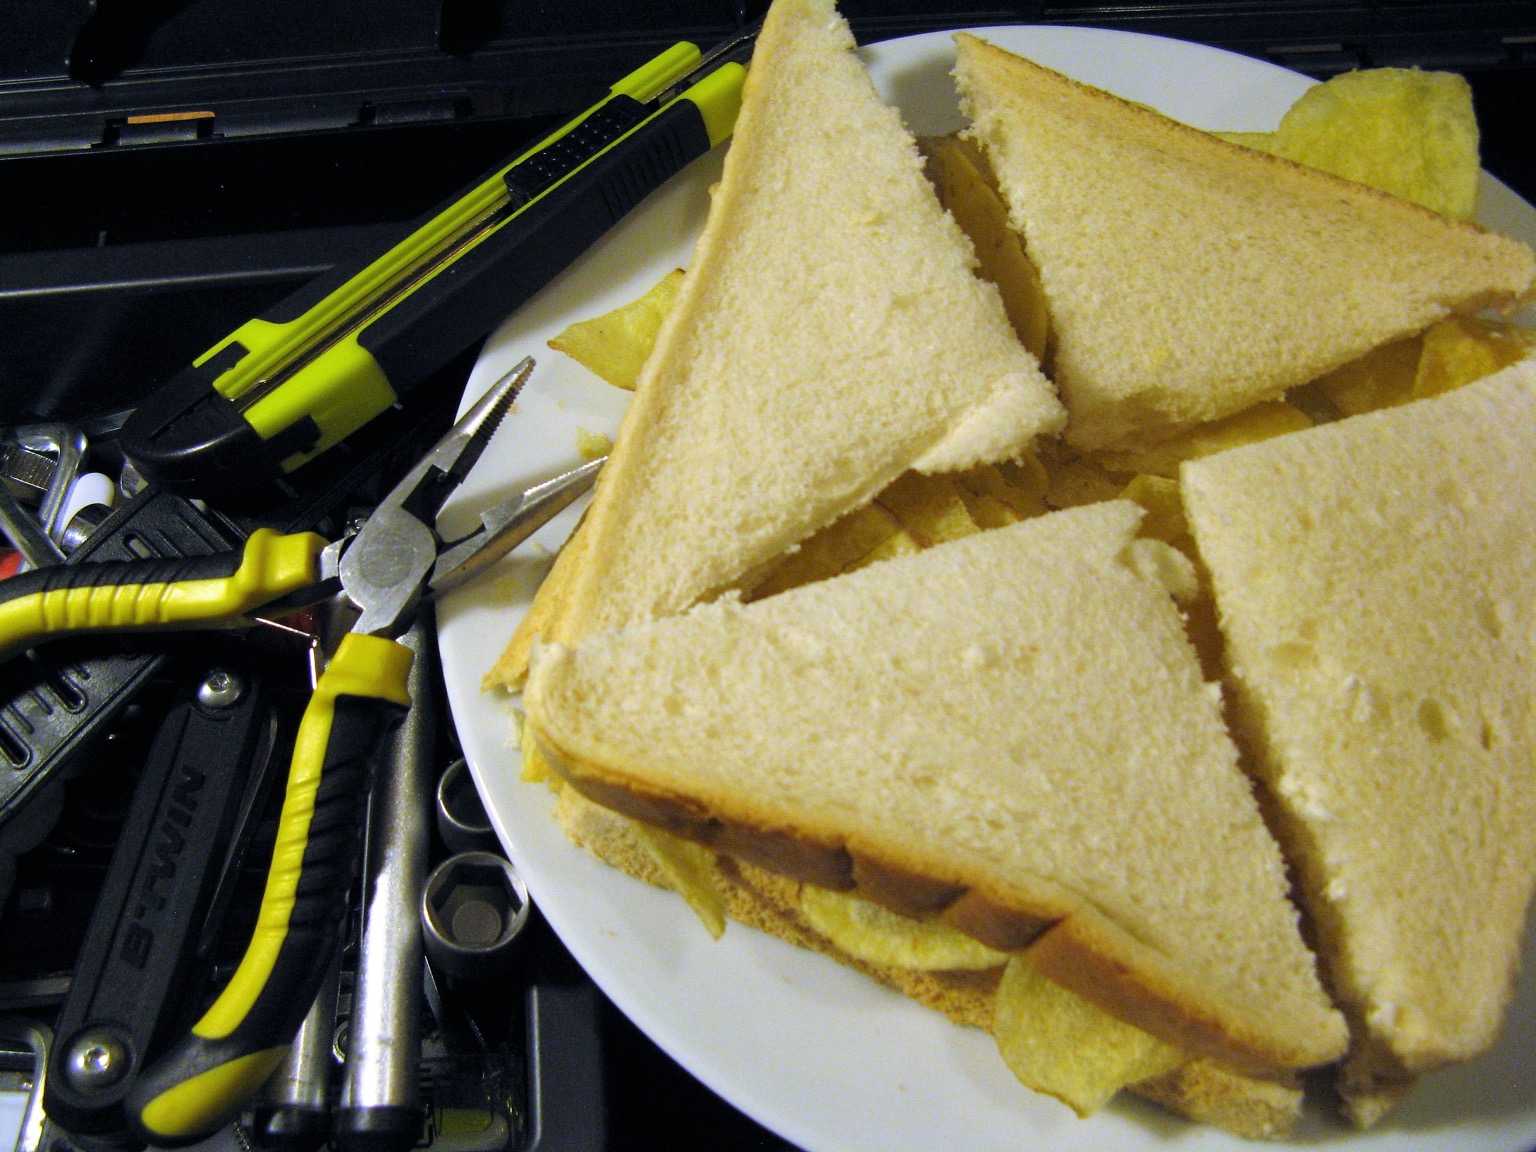 Quartered crisp sandwich in a toolkit